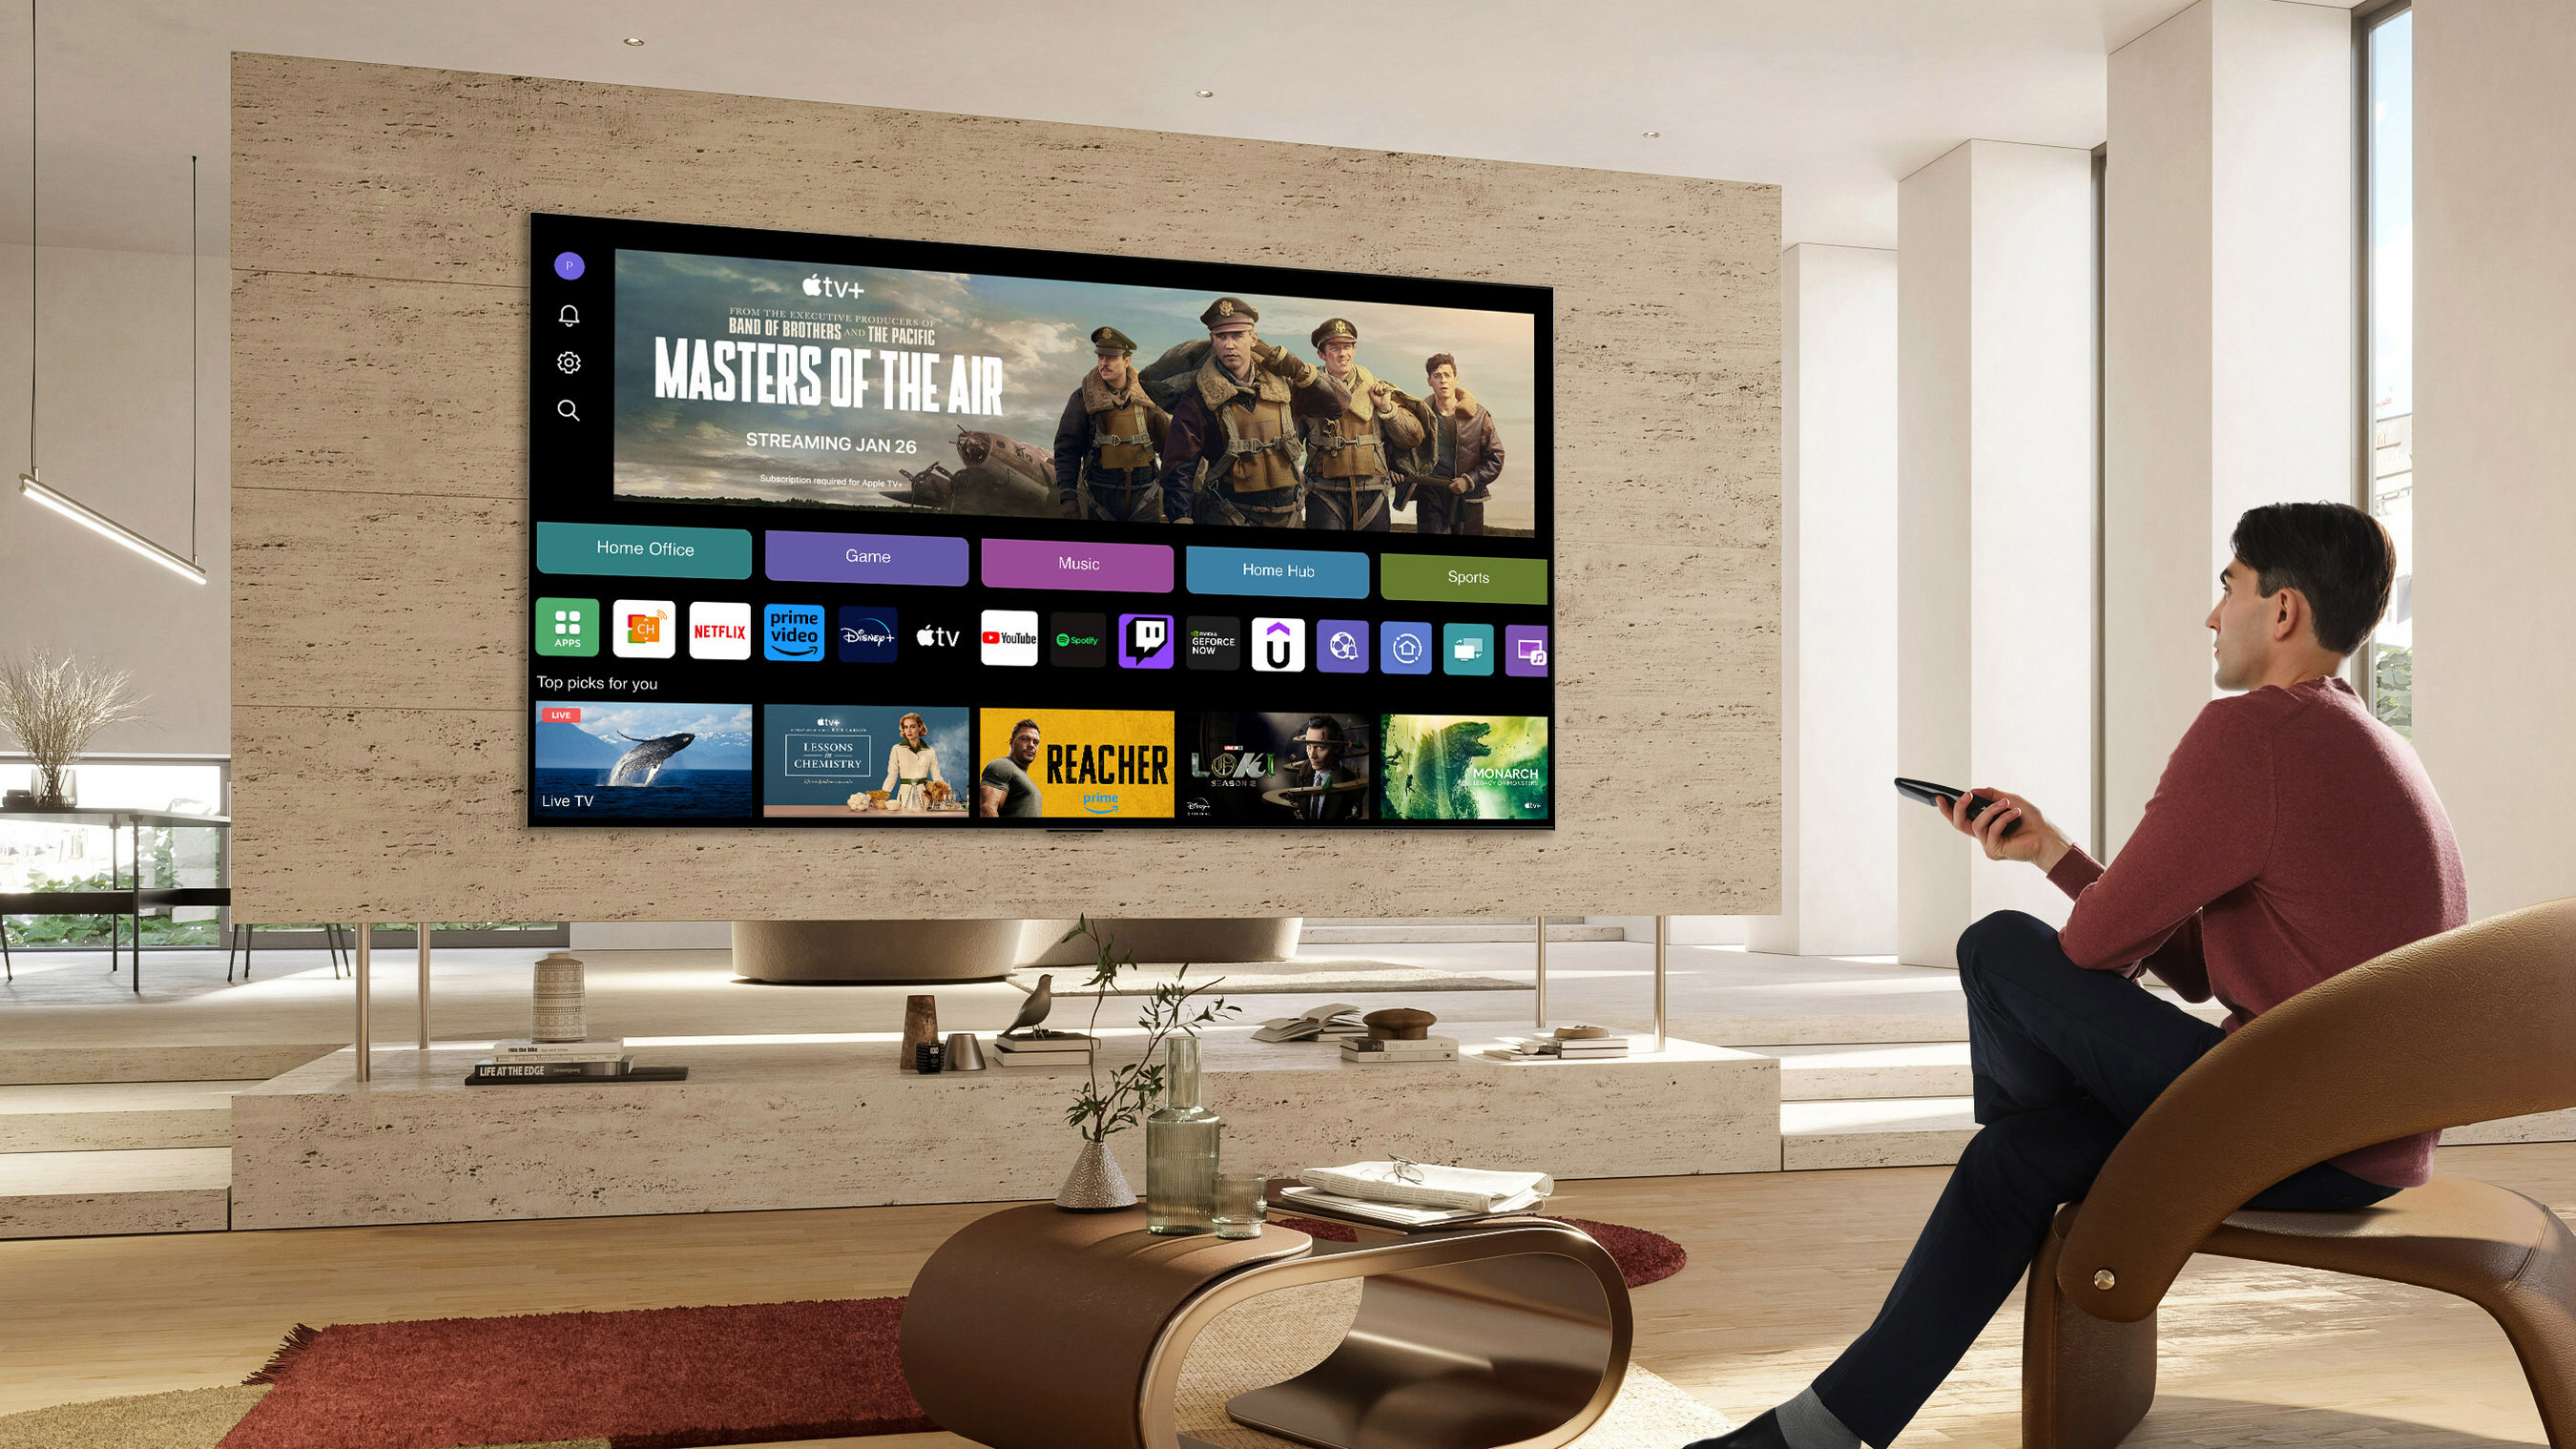 LG webOS TV screen in living room - PR image